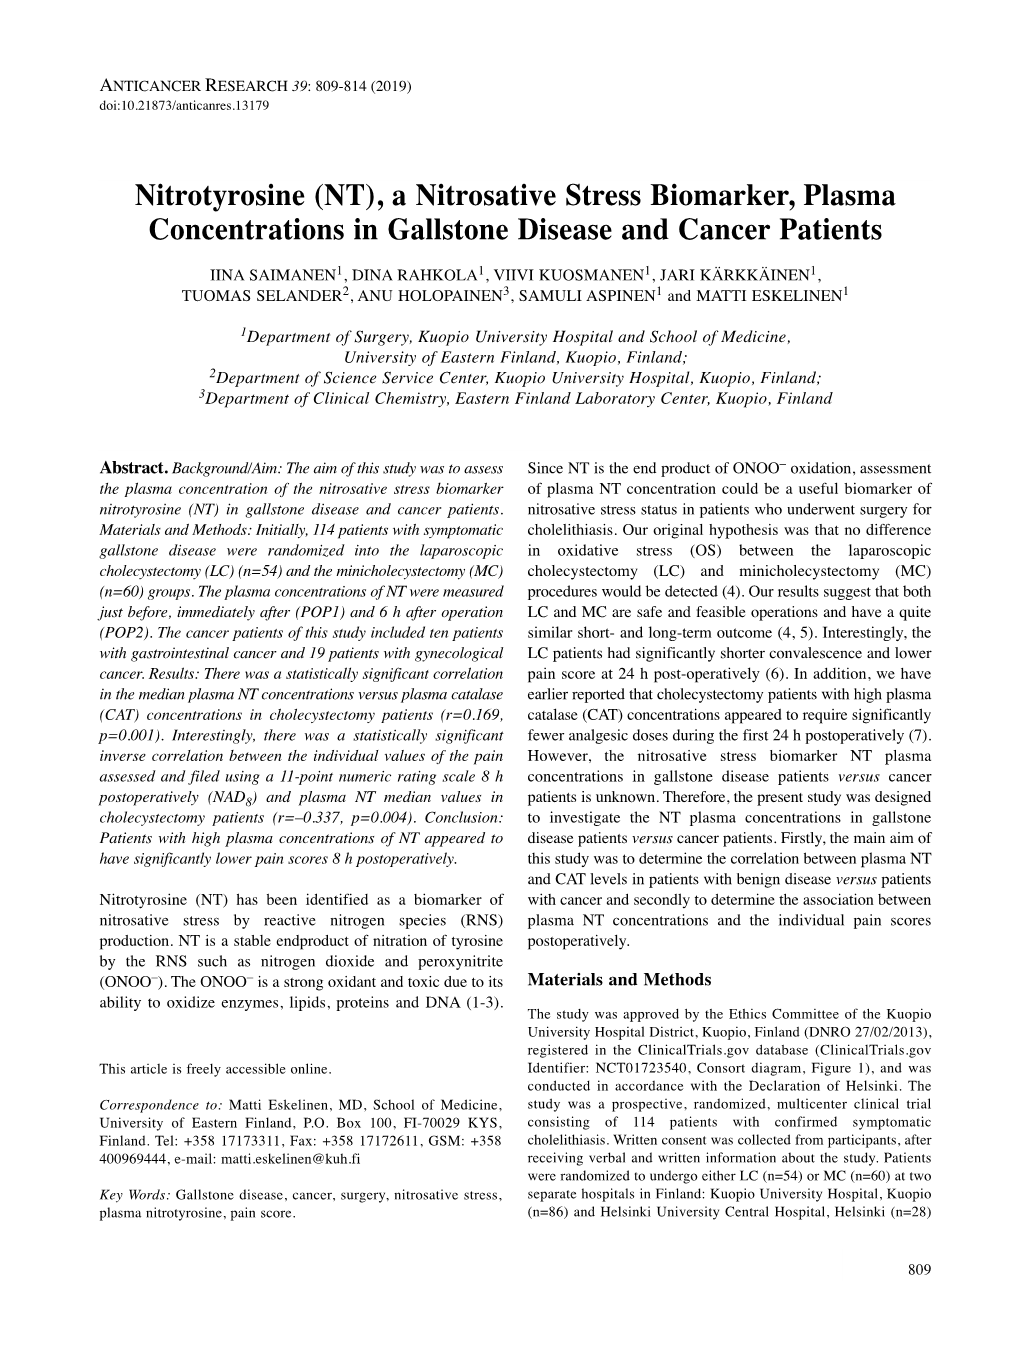 (NT), a Nitrosative Stress Biomarker, Plasma Concentrations in Gallstone